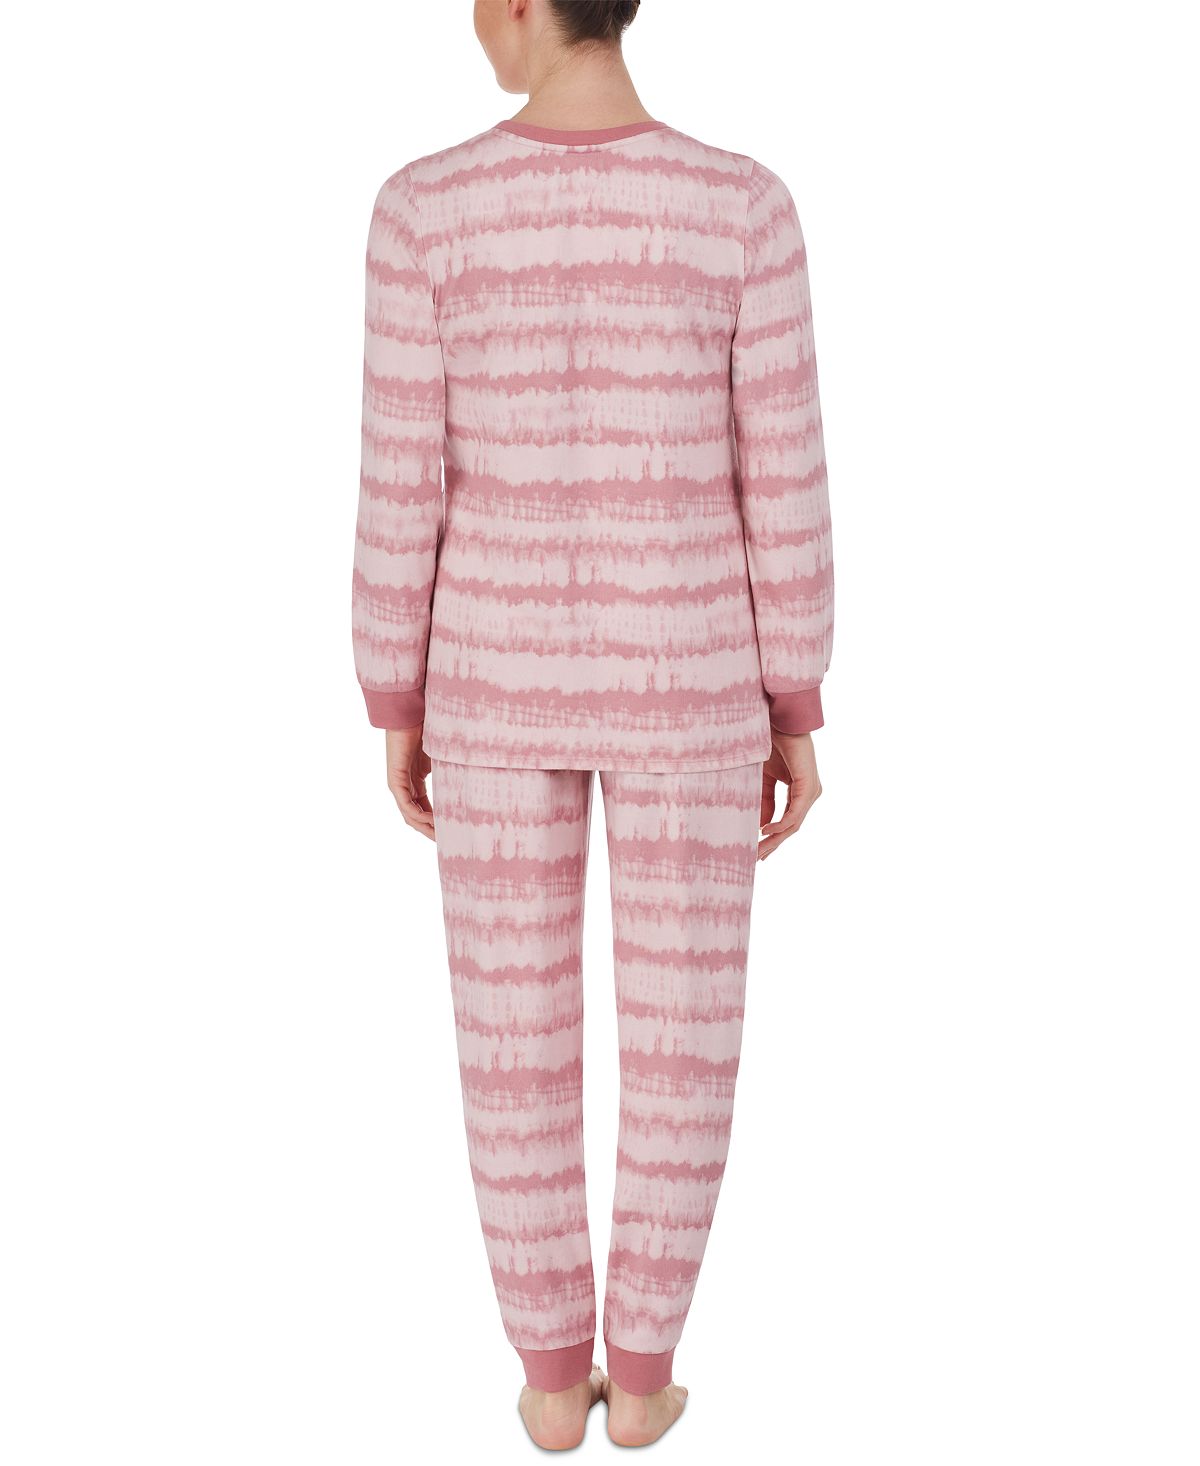 Cuddl Duds Printed Top & Jogger Pants Loungewear Set Pink Print